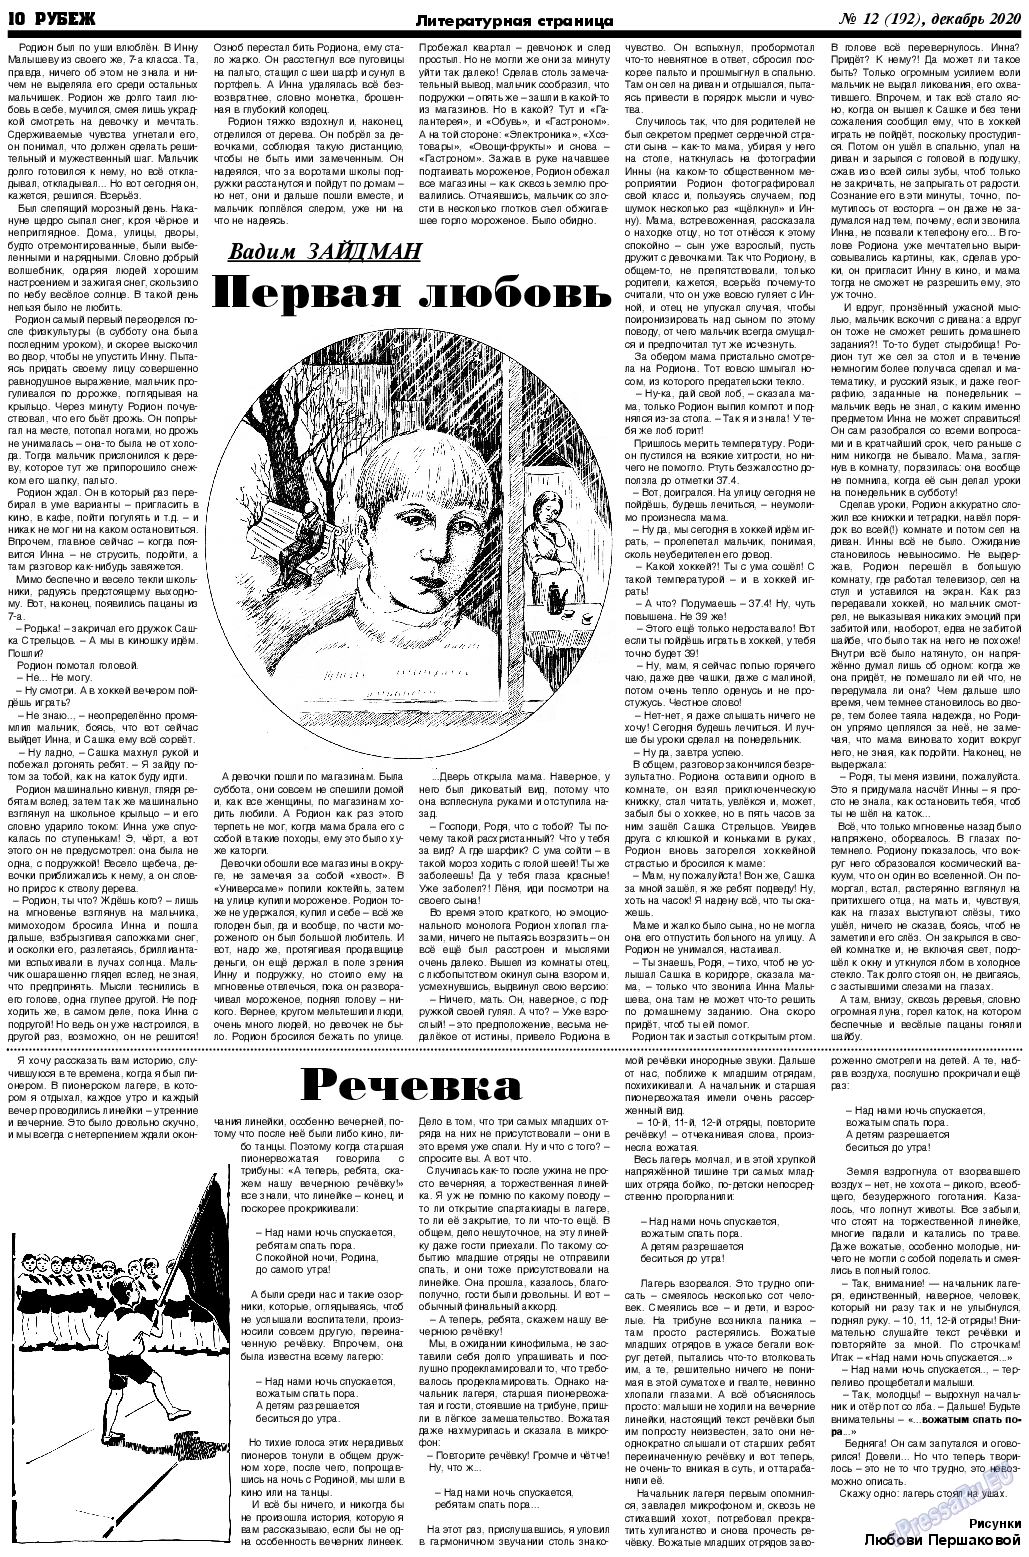 Рубеж, газета. 2020 №12 стр.10